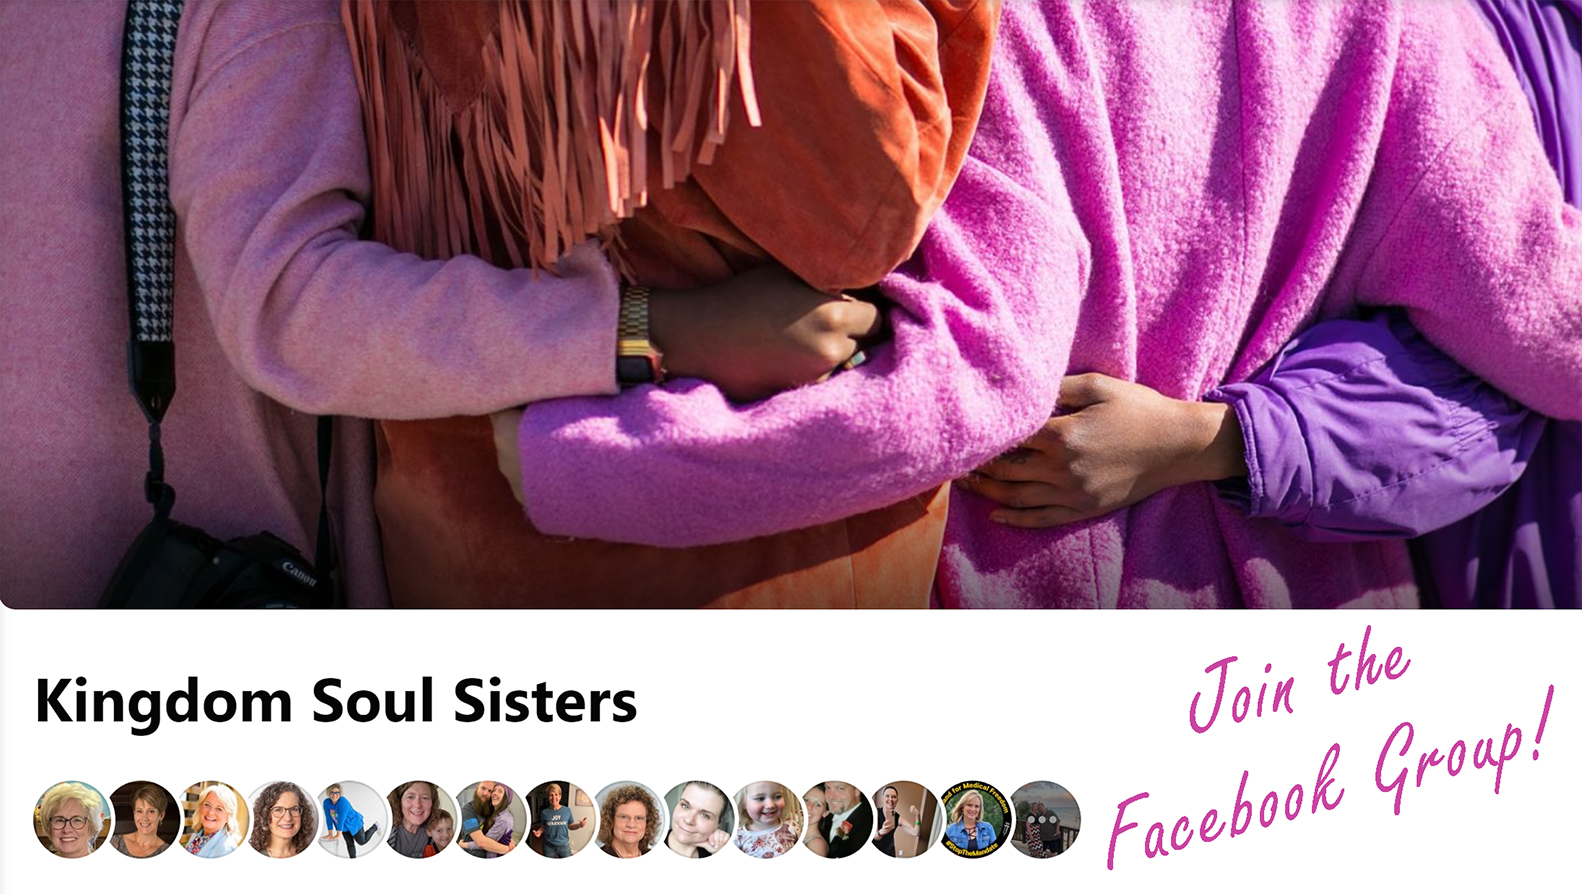 Kingdom Soul Sisters Facebook Group